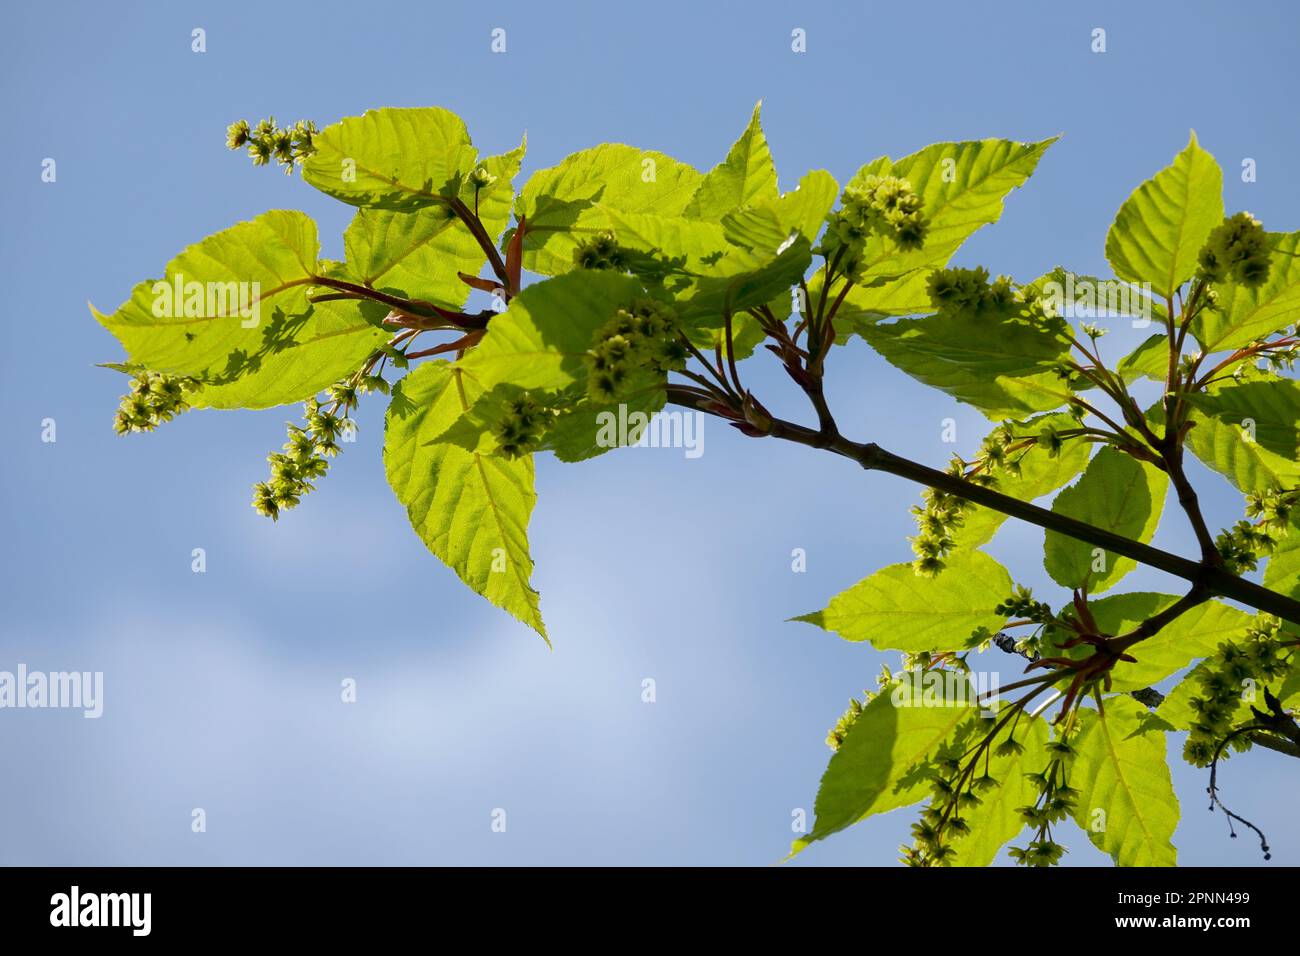 Spring, Green, Leaves, On, Branches, Deciduous, Maple Acer pectinatum subsp laxiflorum Stock Photo